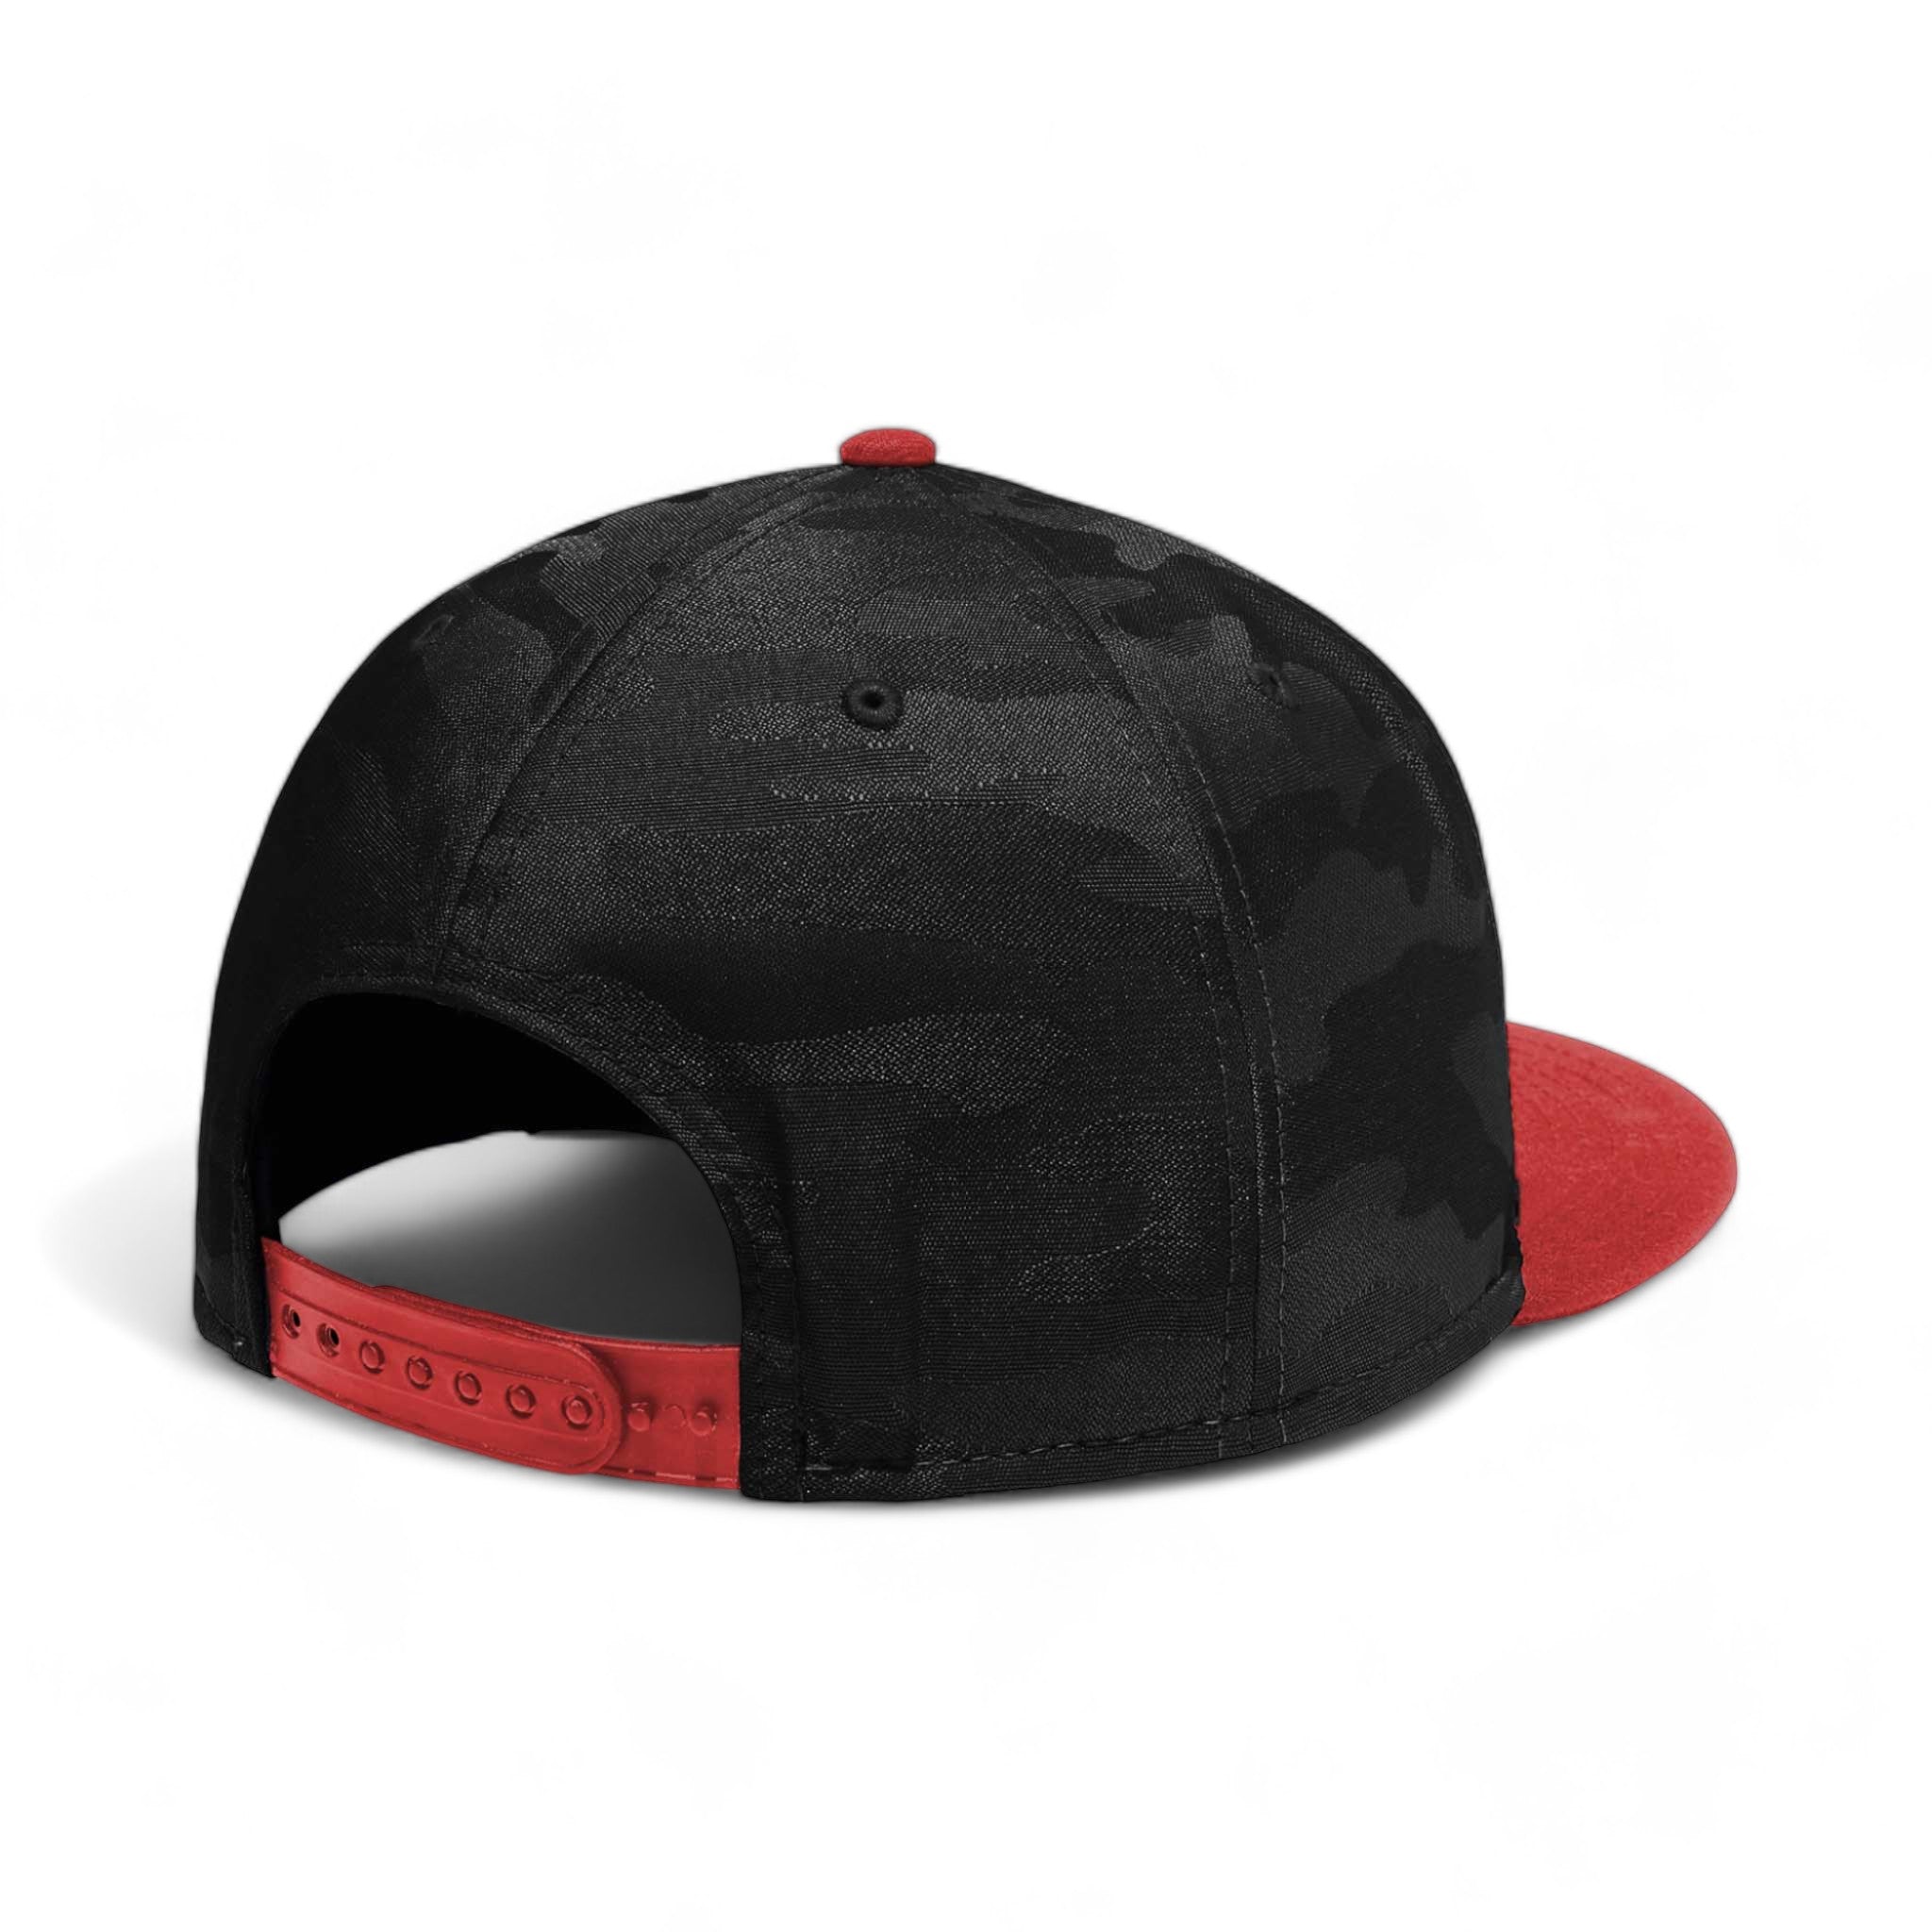 Back view of New Era NE407 custom hat in scarlet and black camo